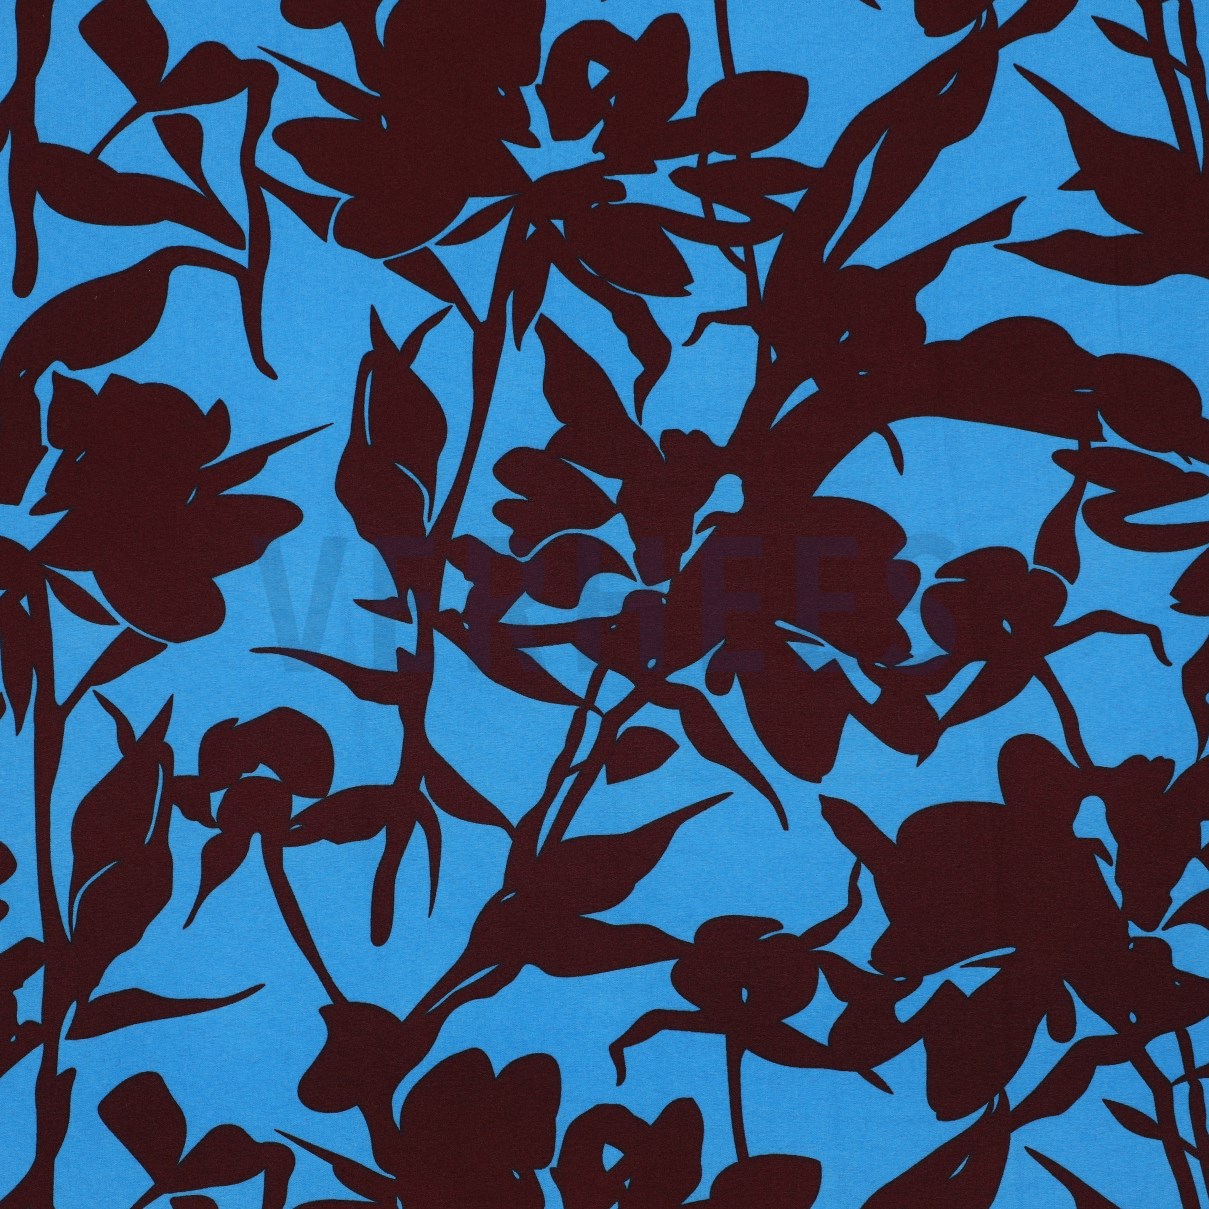 MAGNOLIA STRETCH GRAPHIC BROWN / BLUE (high resolution)